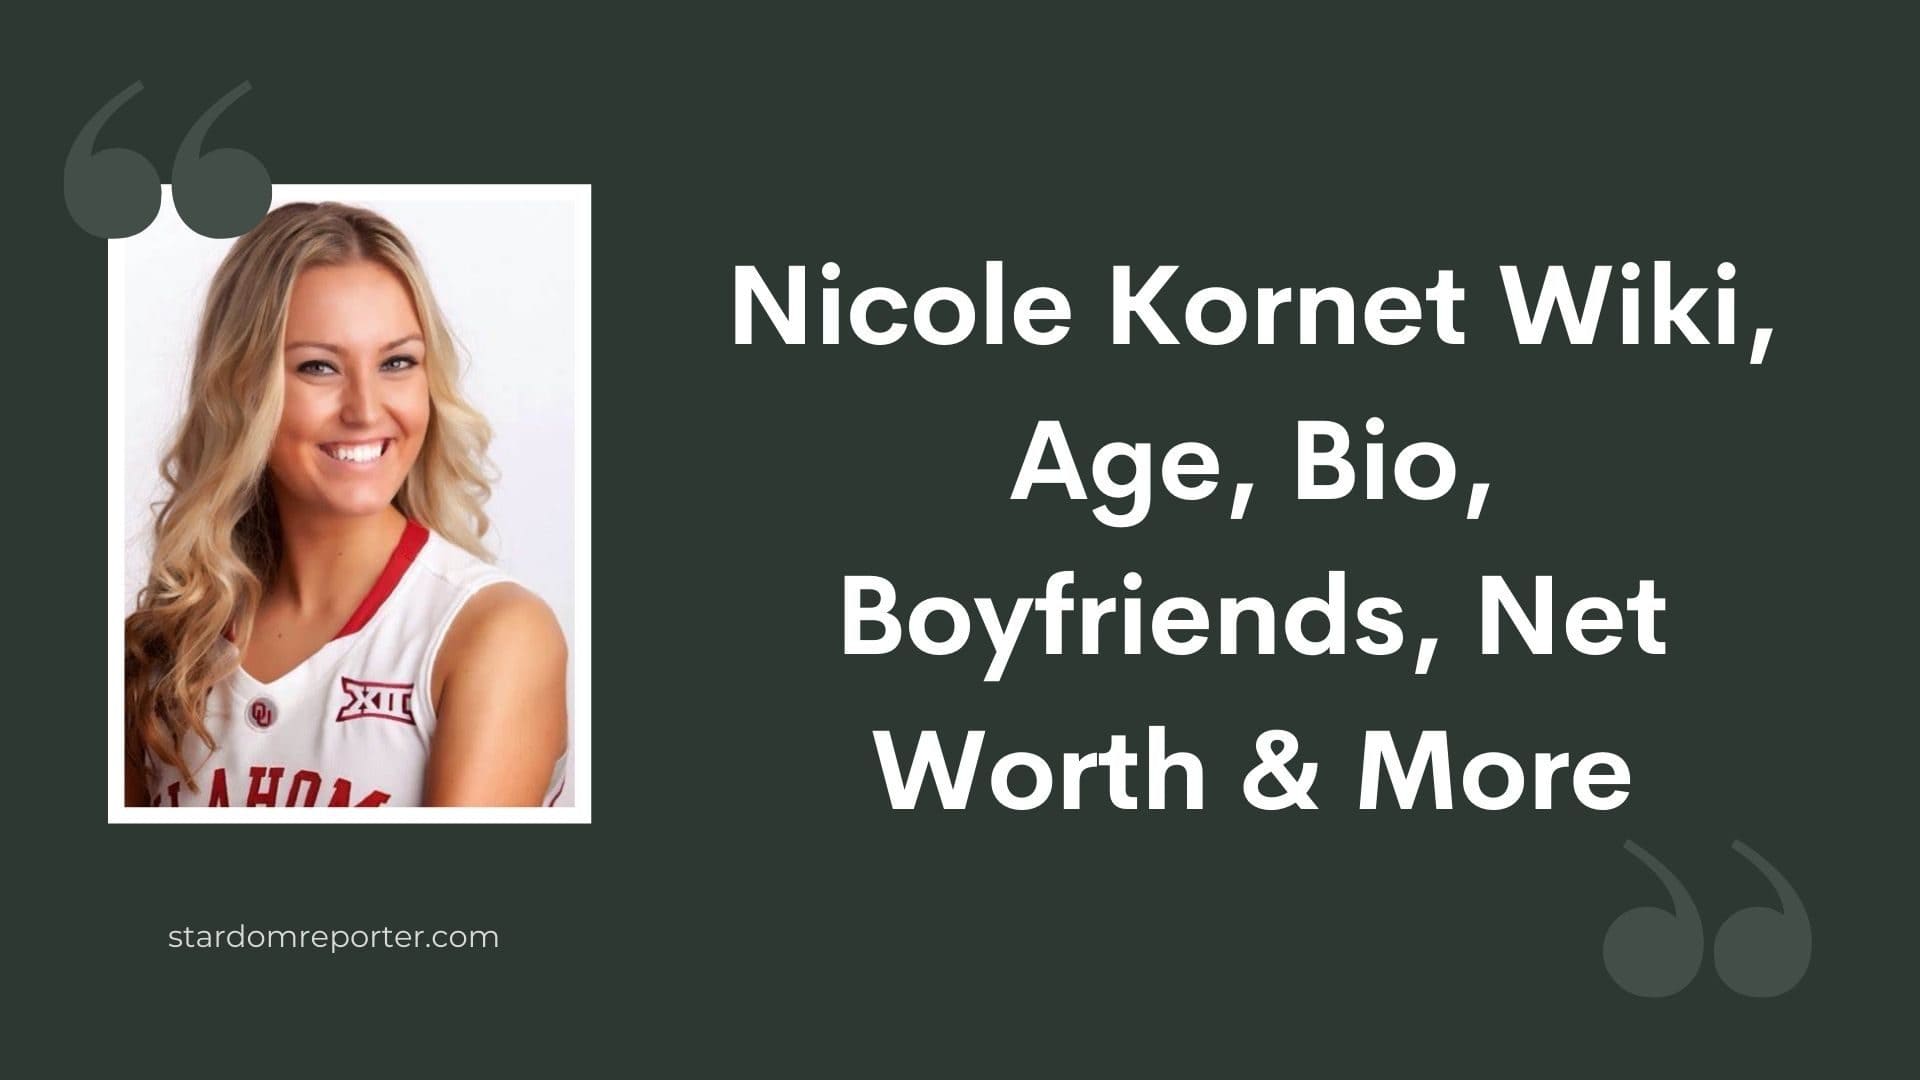 Nicole Kornet Wiki, Age, Bio, Boyfriends, Net Worth & More - 41